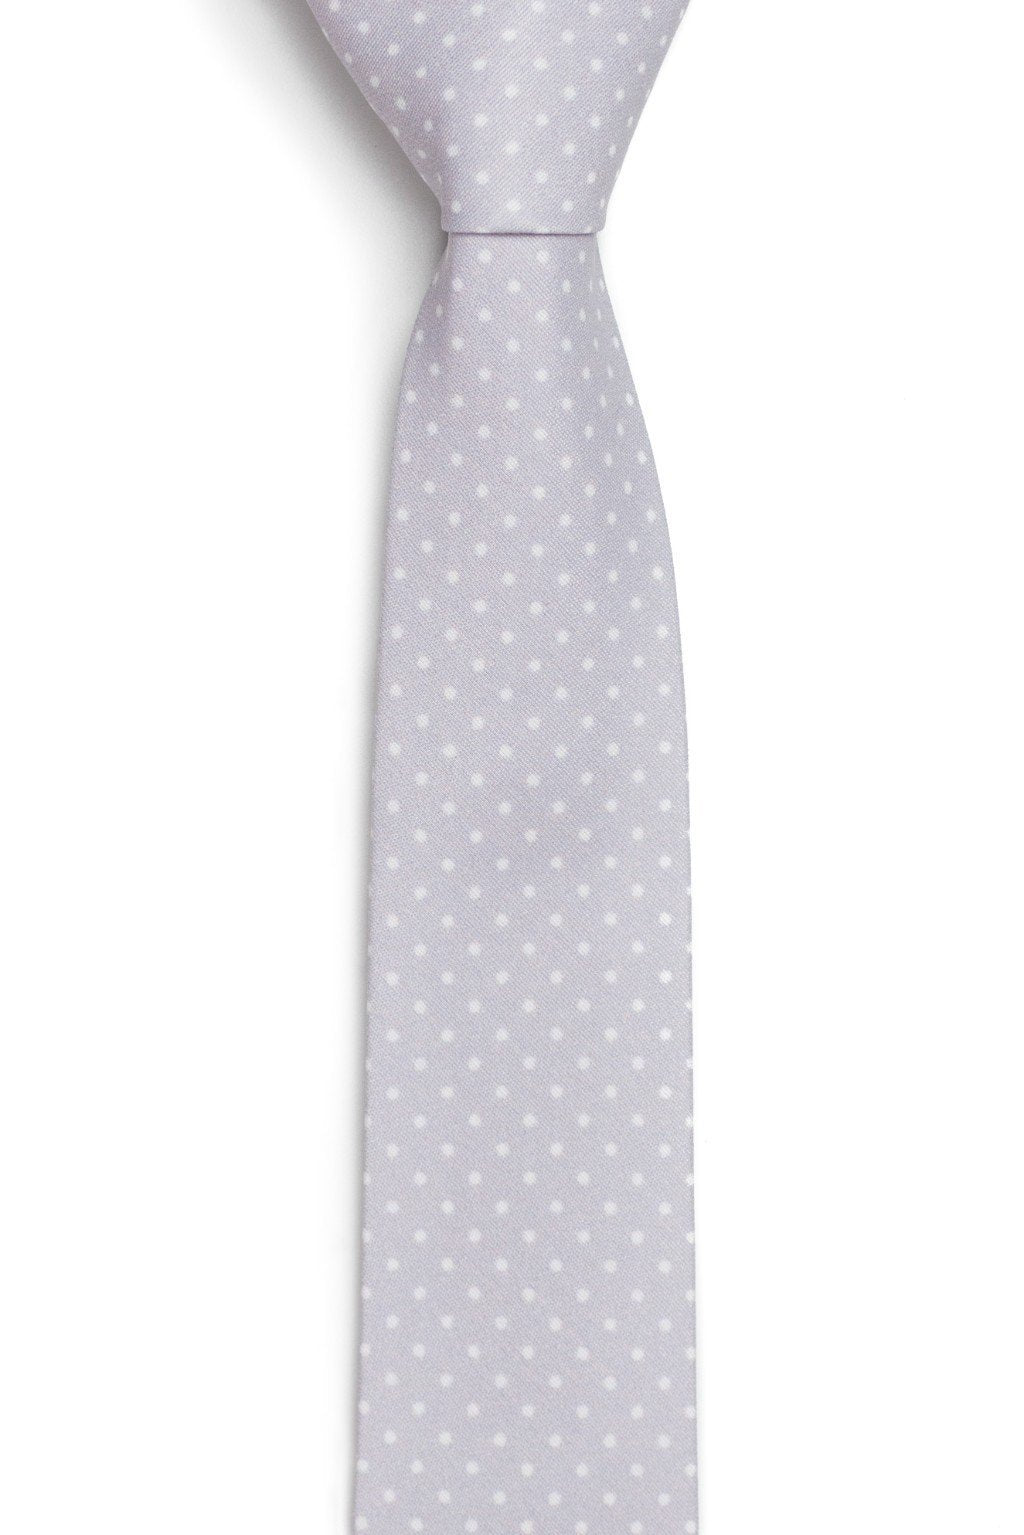 Washington missionary tie